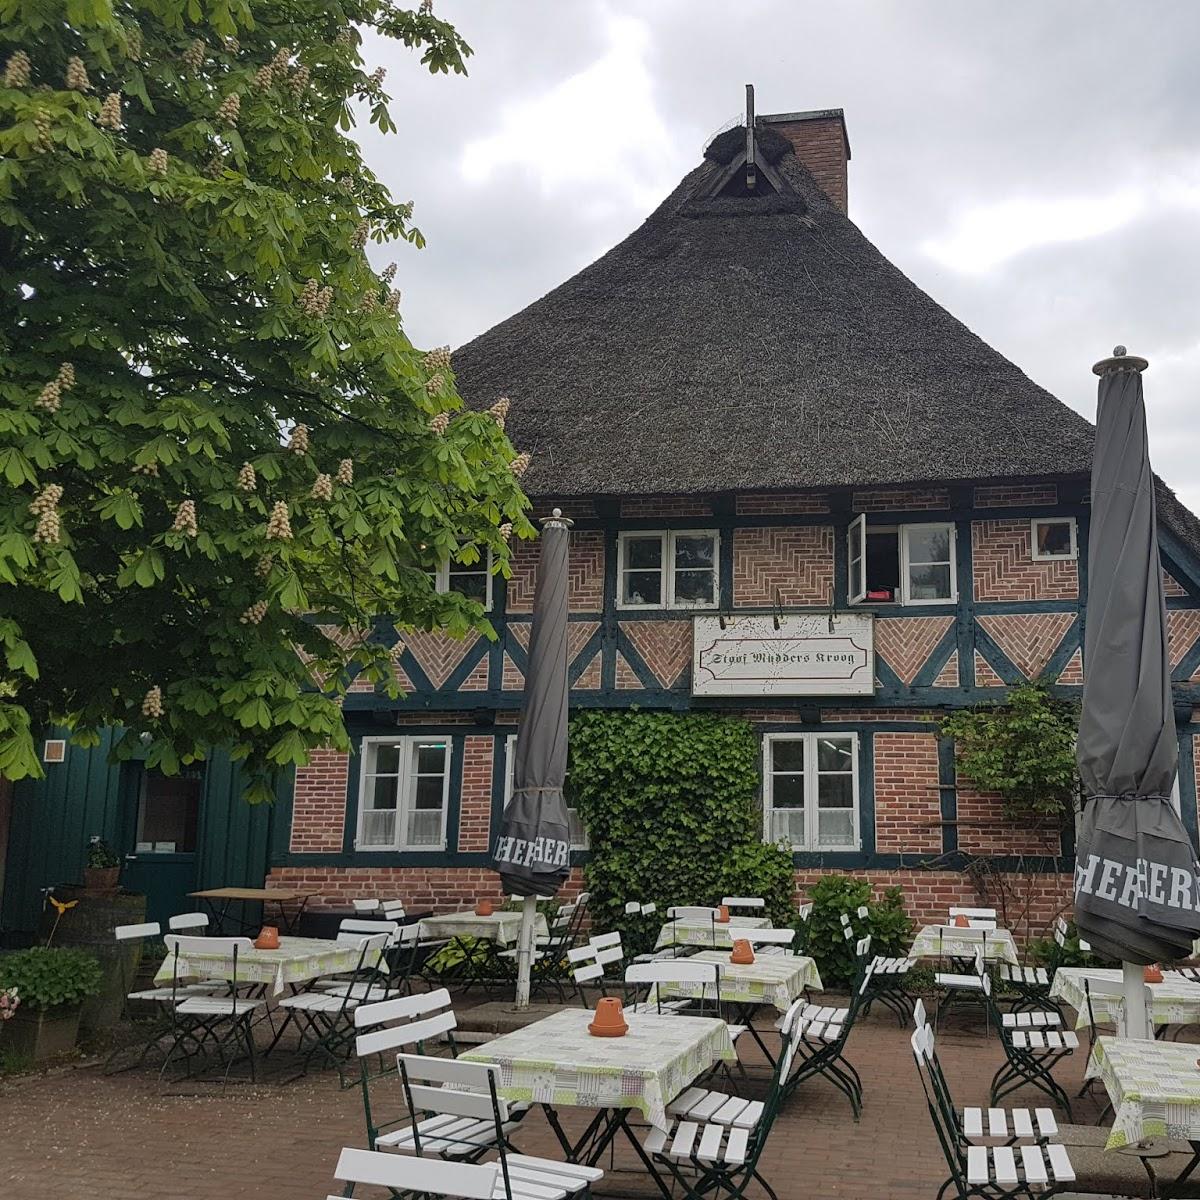 Restaurant "Stoof Mudders Laden" in Rosengarten